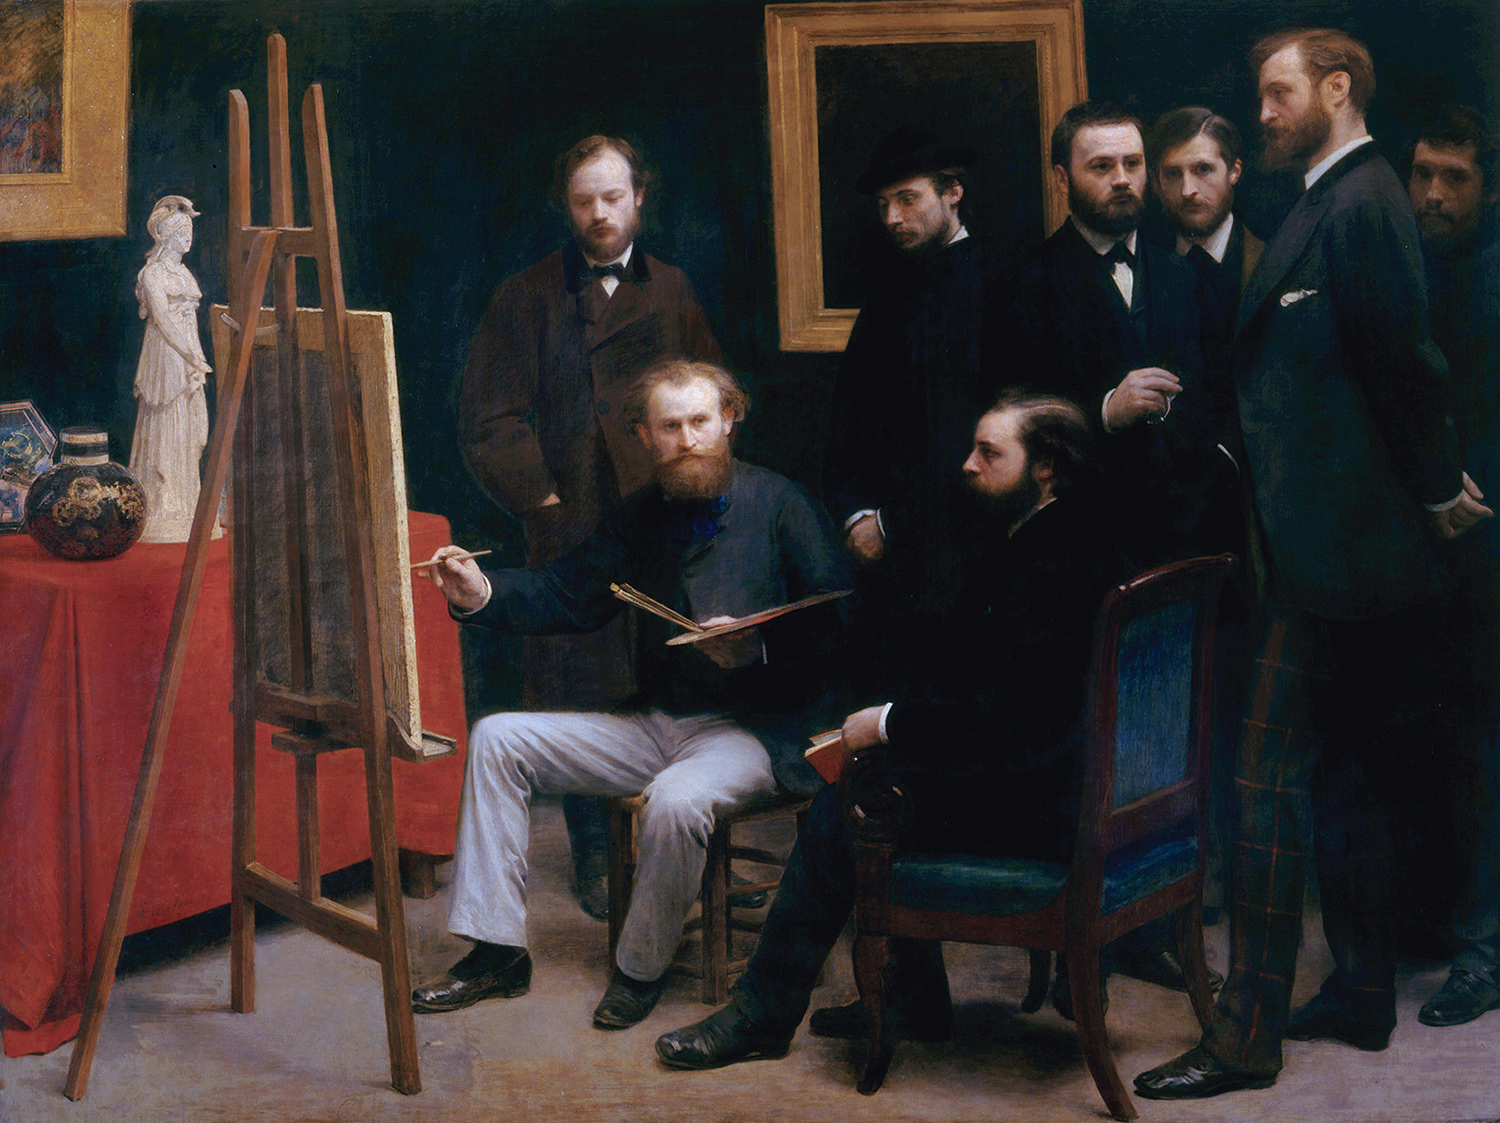 Impressionism : the 19th century movement